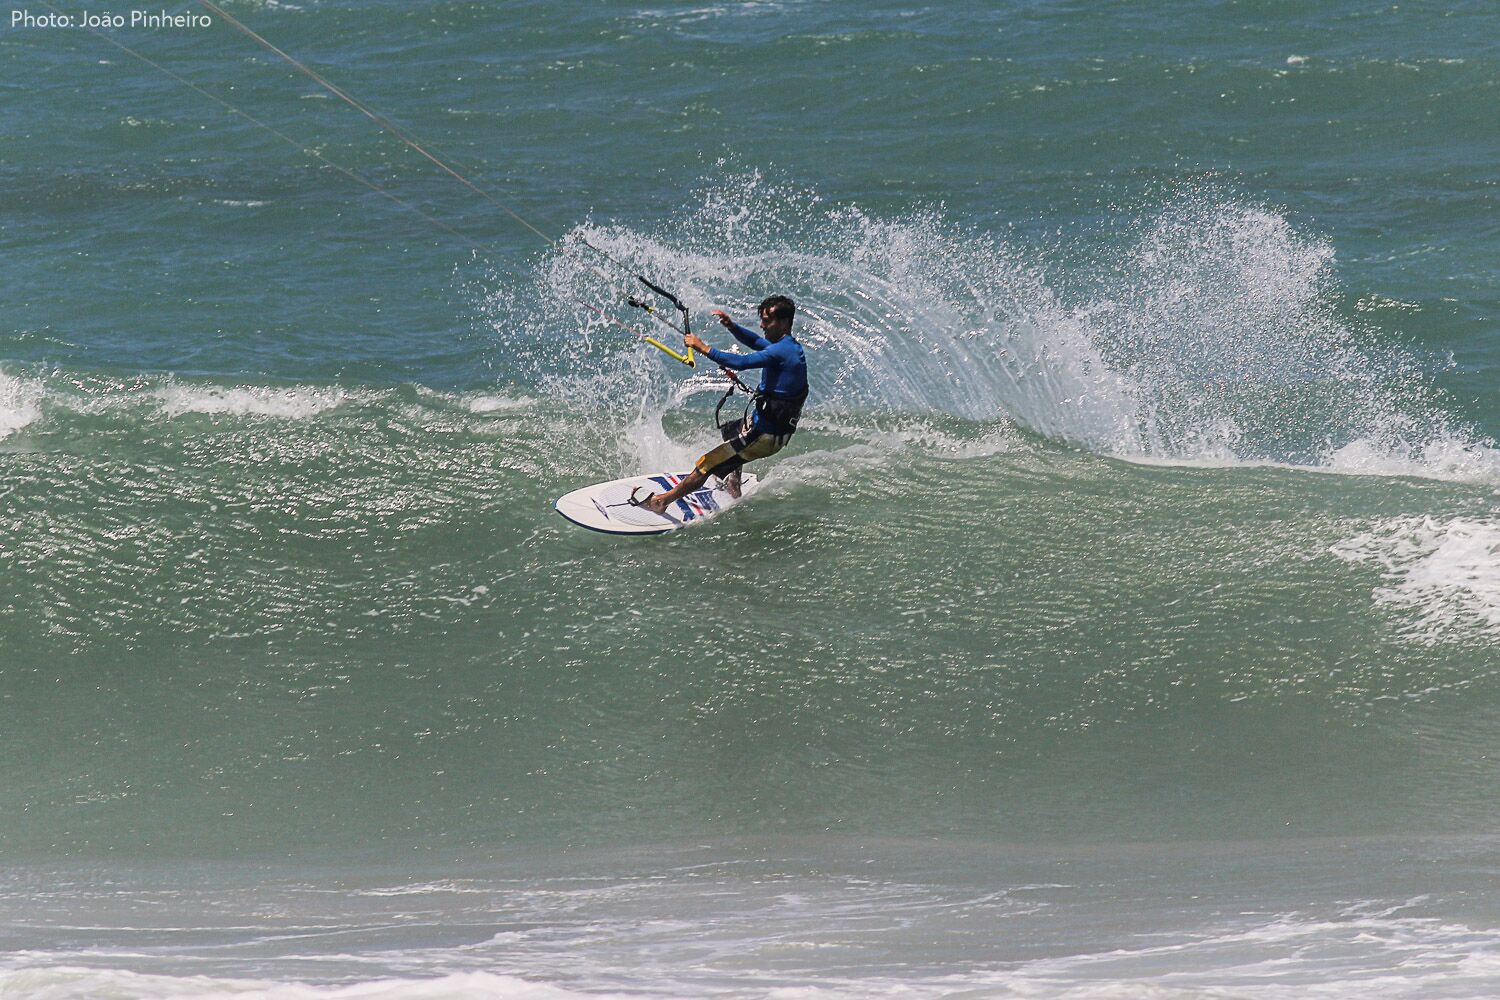 Kitesurfer getting a wave in Guajiru.